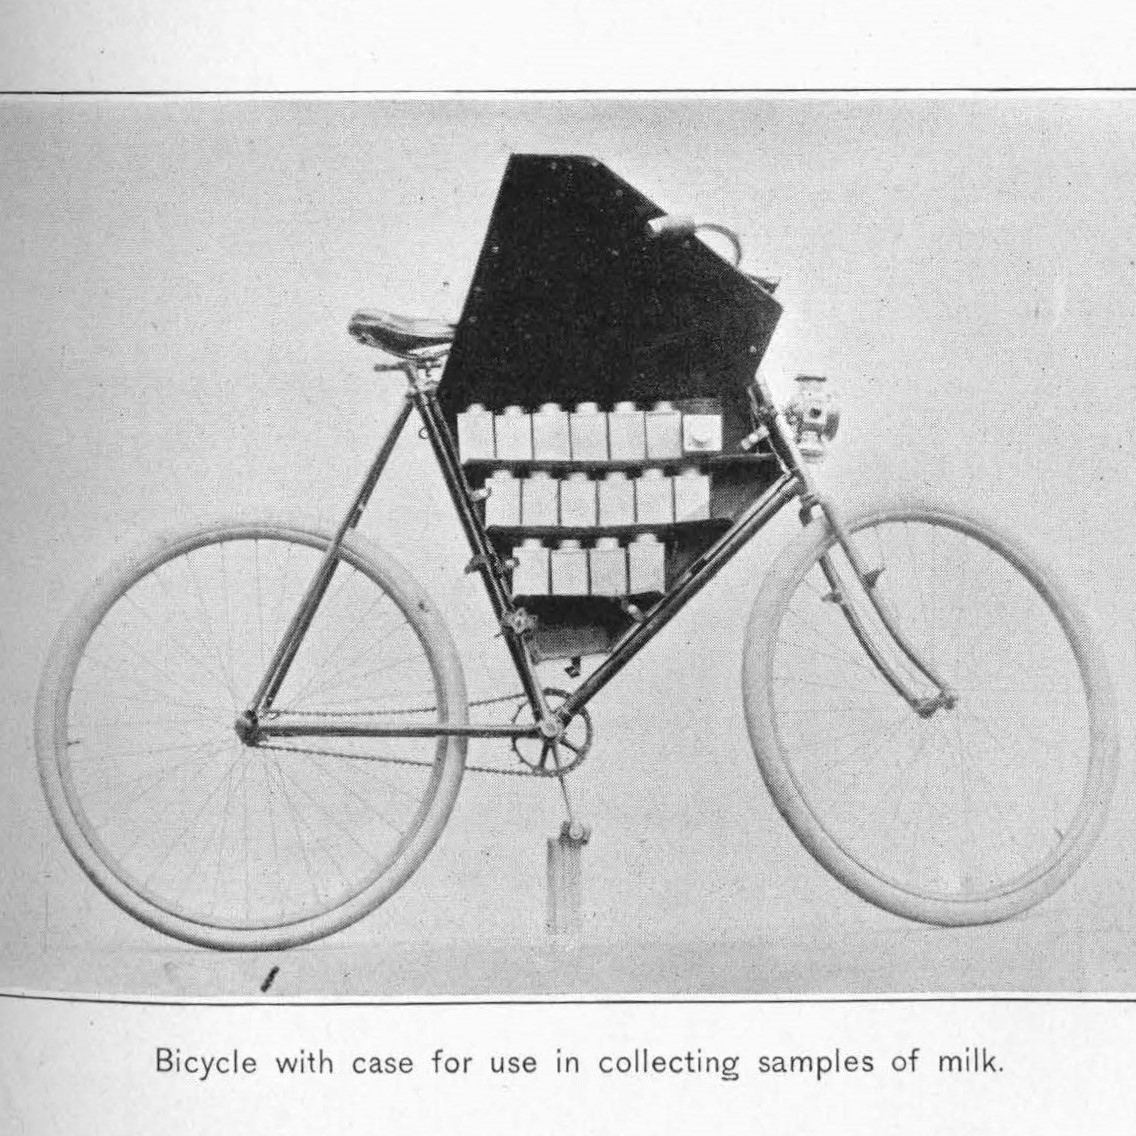 milk sampling bicycle